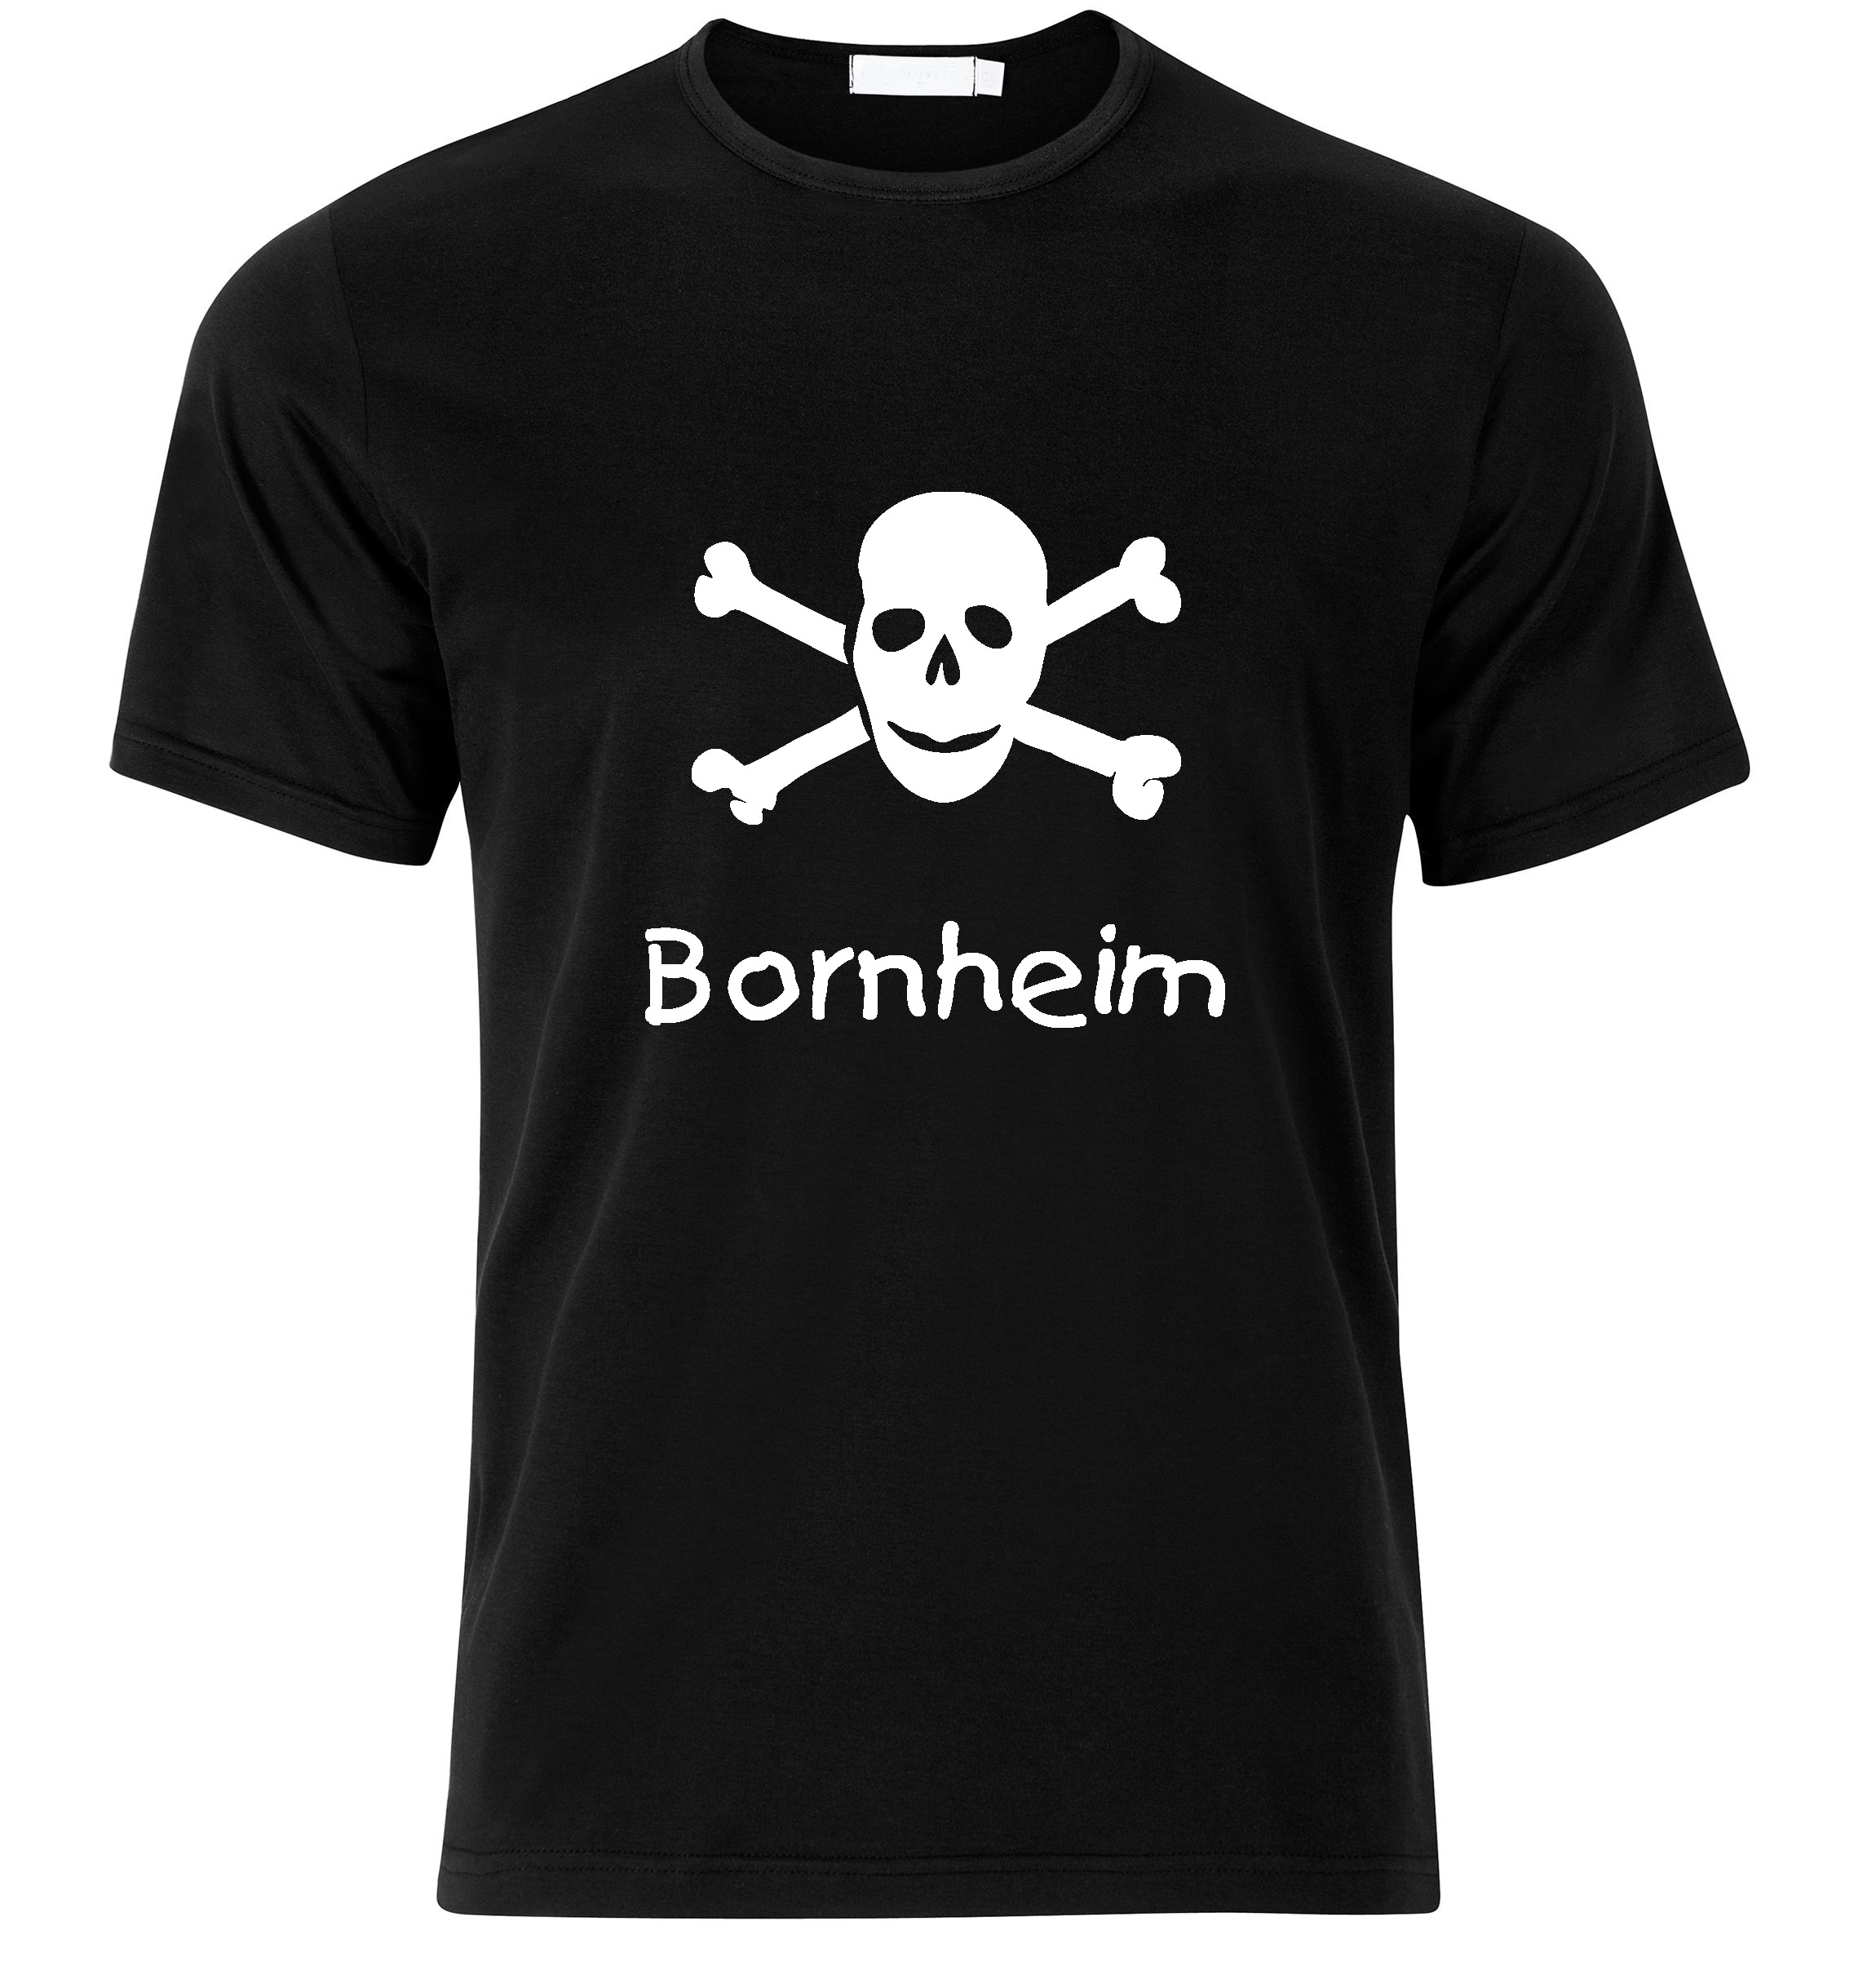 T-Shirt Bornheim Jolly Roger, Totenkopf